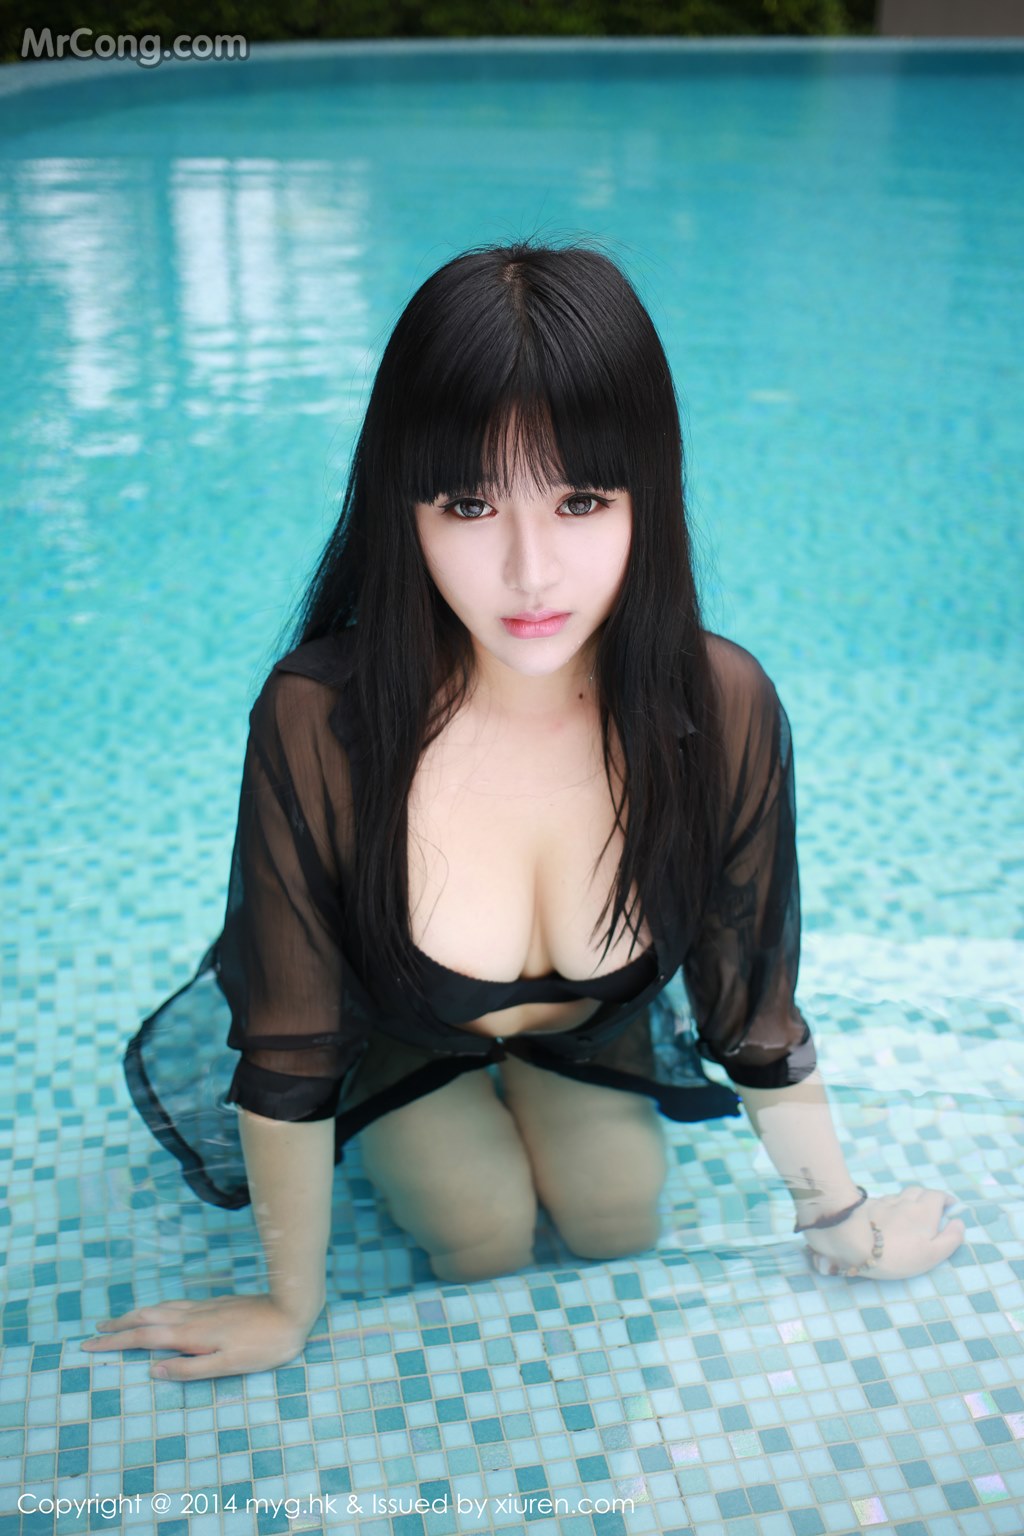 MyGirl Vol.022: Model Ba Bao icey (八宝 icey) (66 pictures) photo 3-14